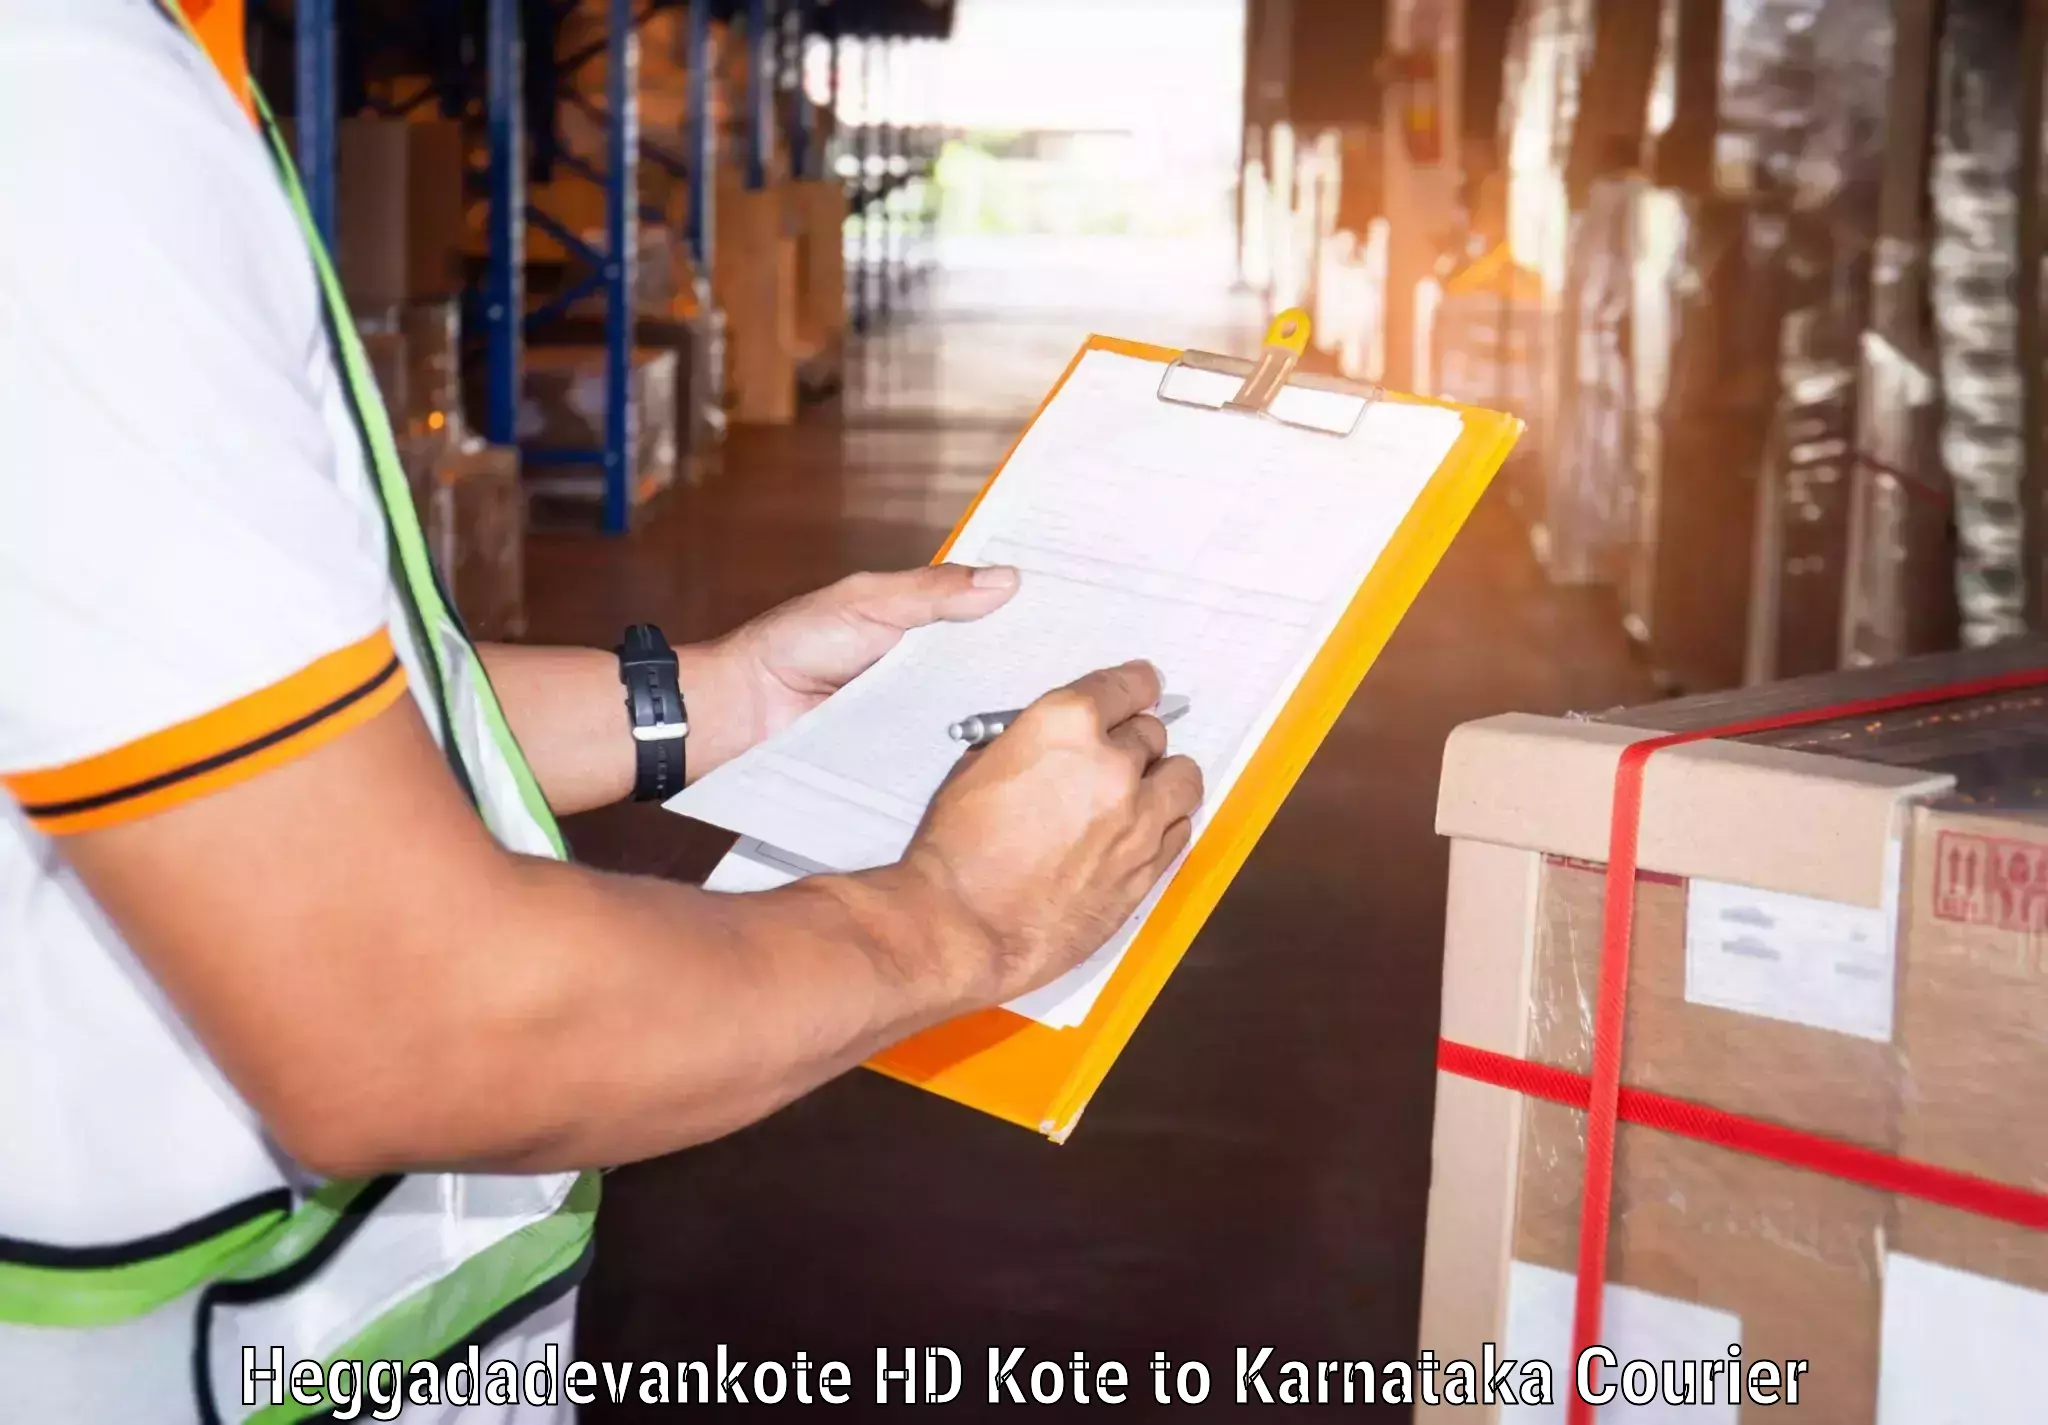 Parcel handling and care Heggadadevankote HD Kote to Magadi